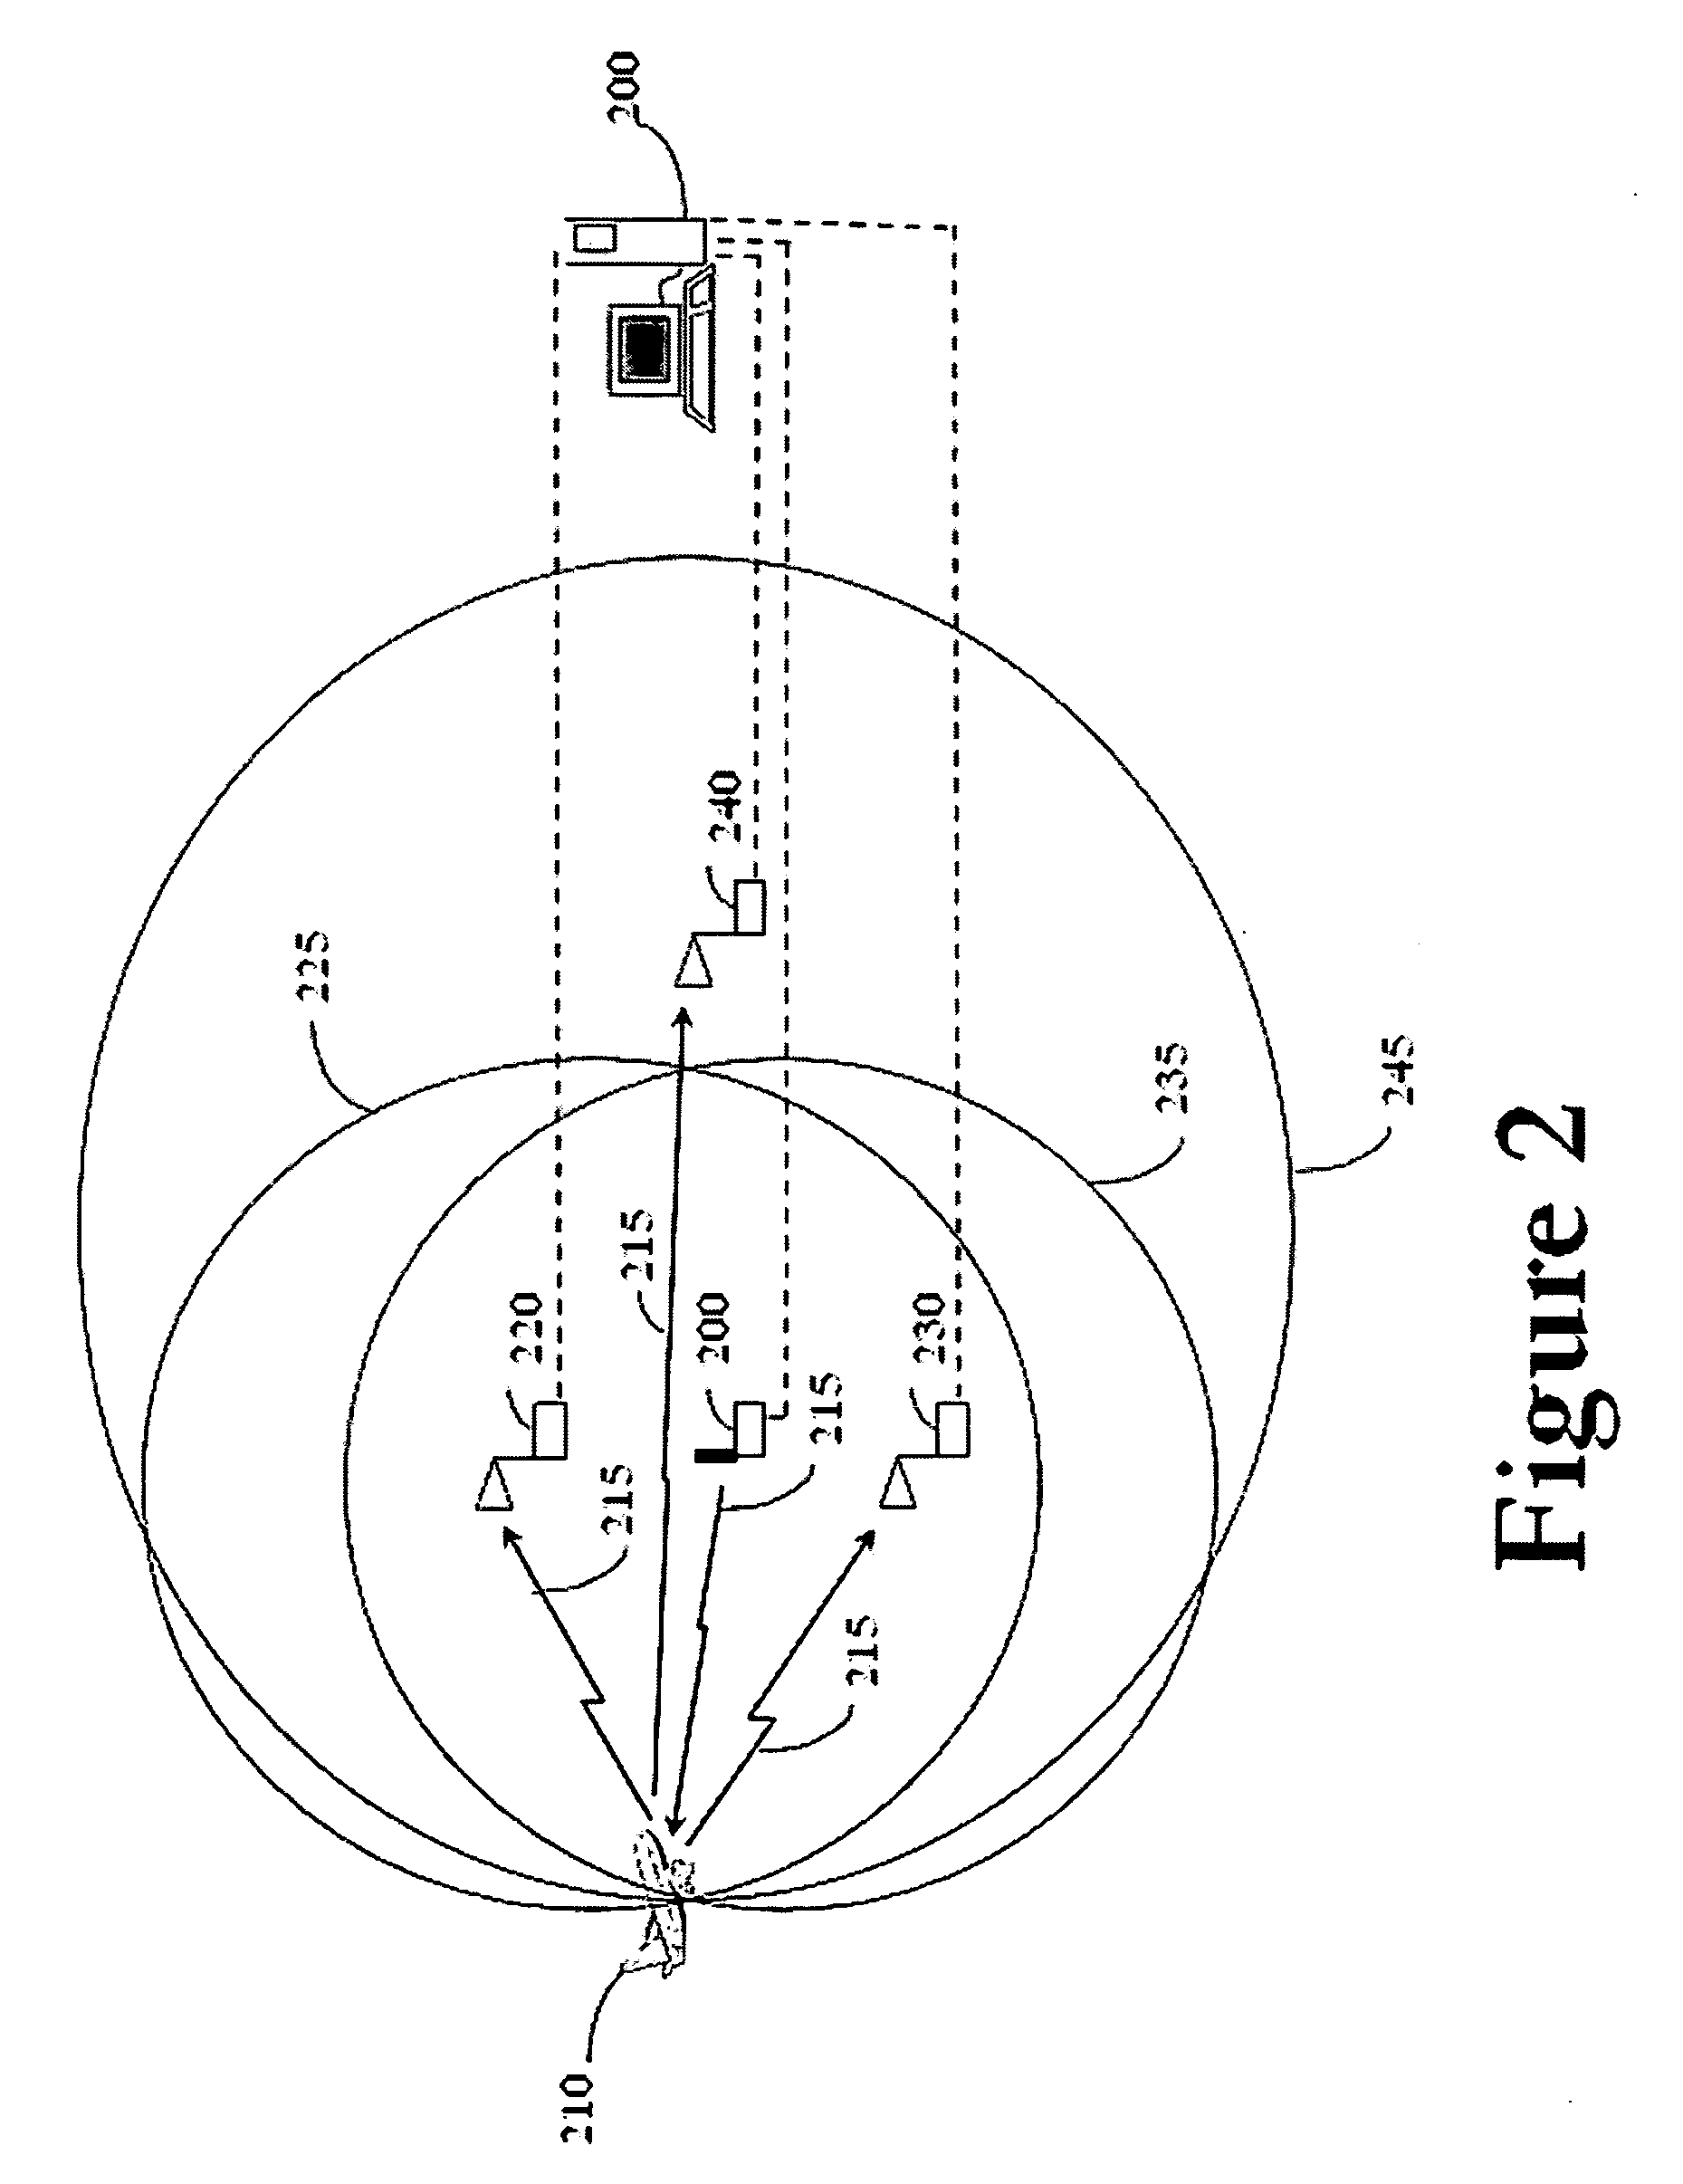 Method and system for elliptical-based surveillance